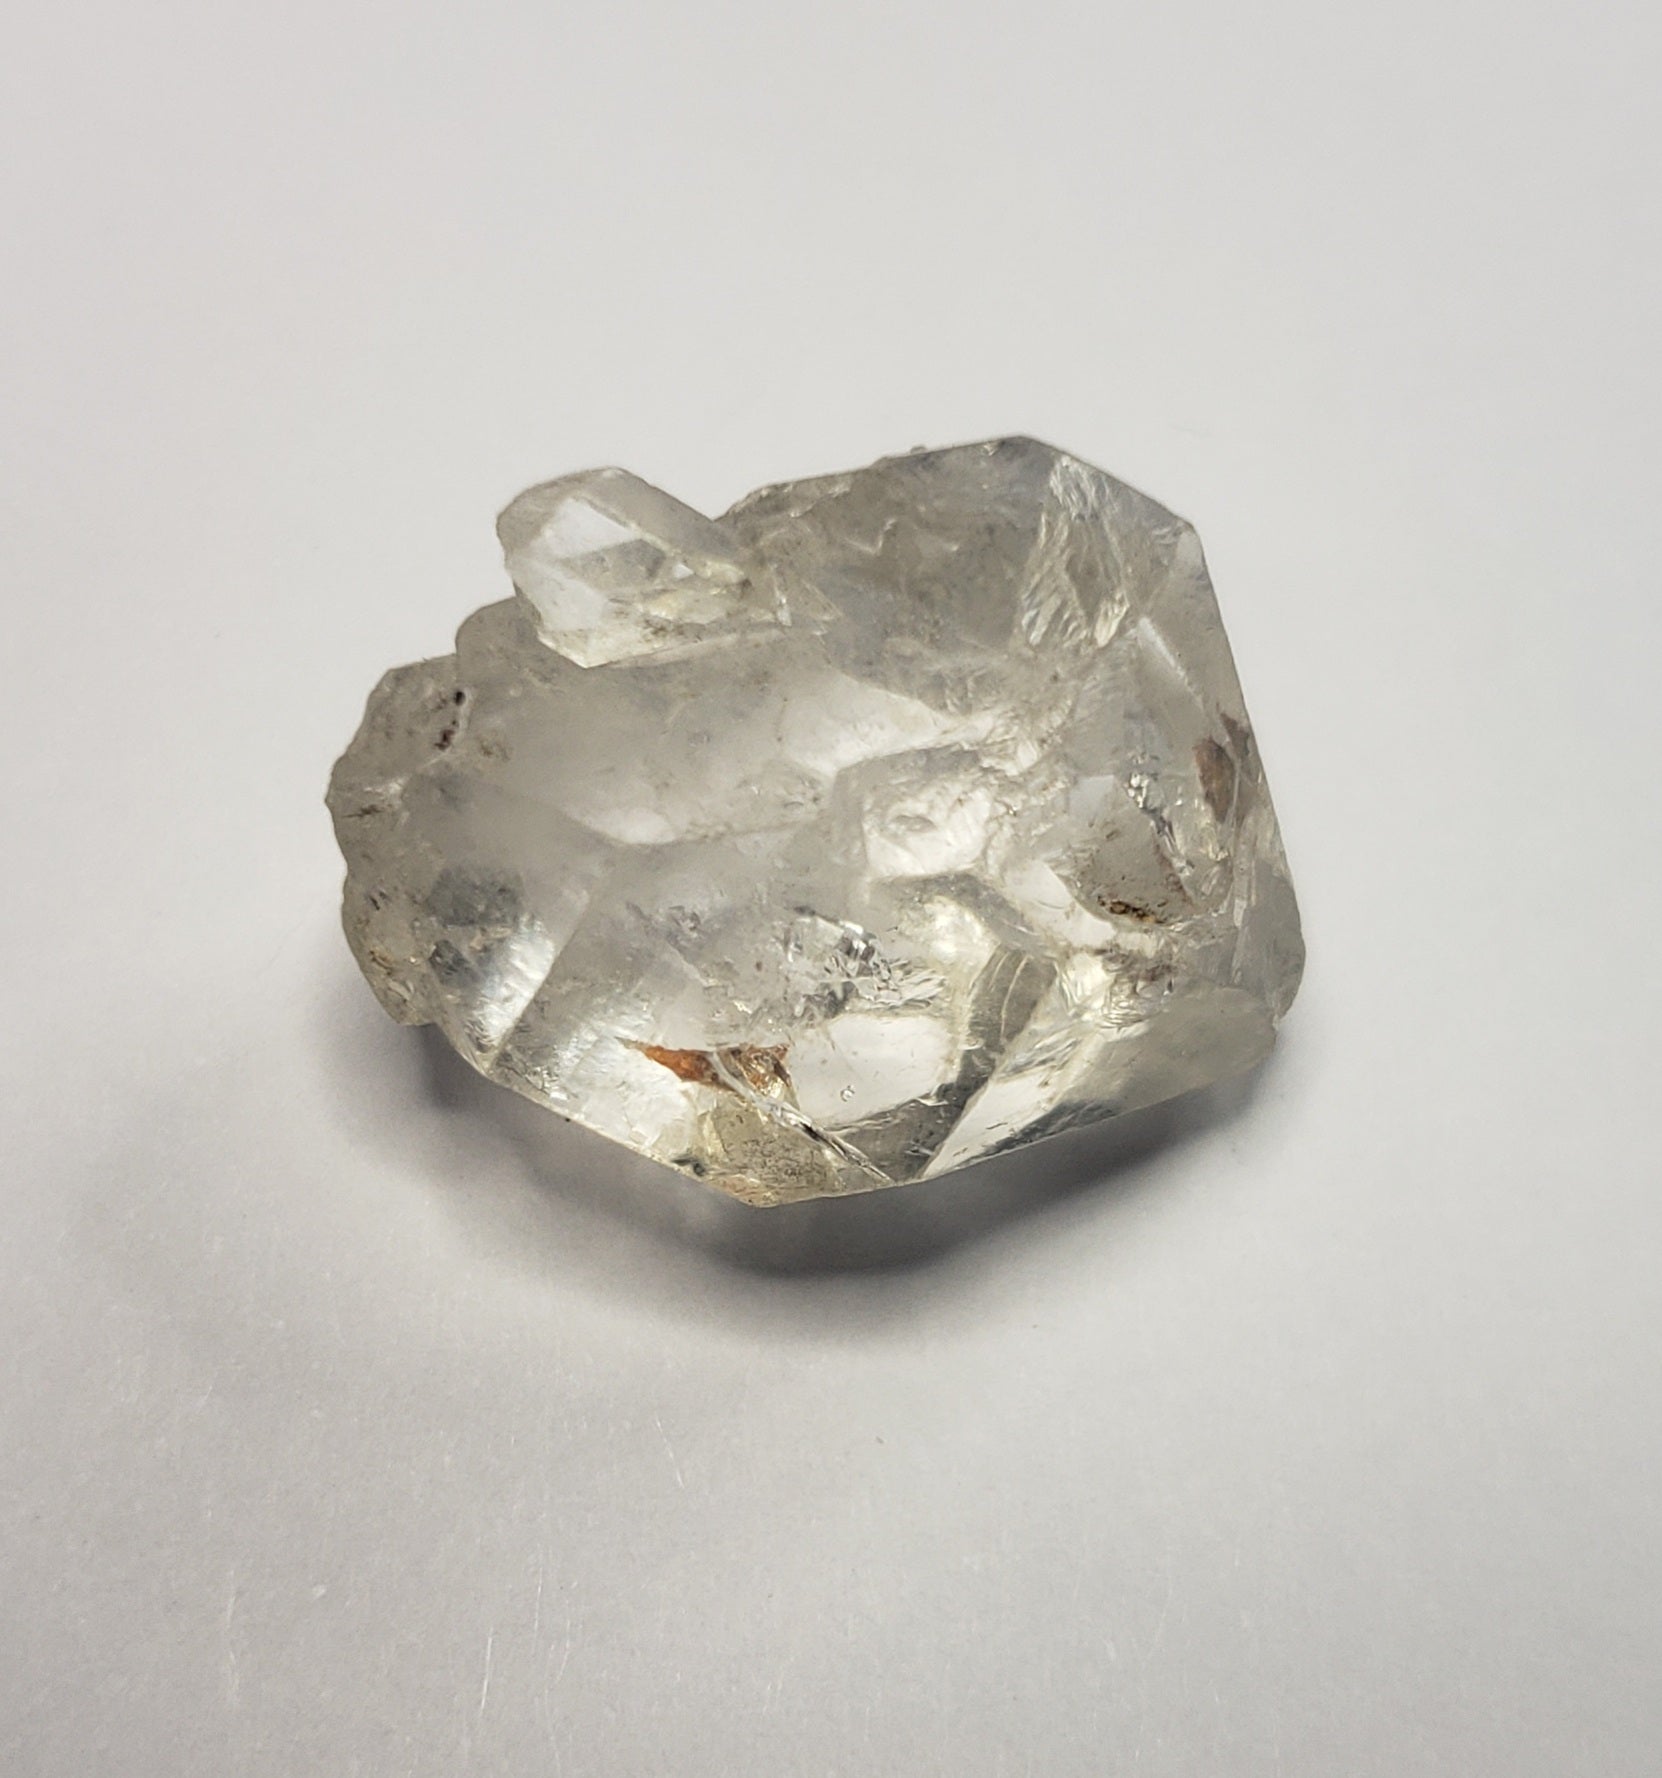 Double terminated quartz - Petroleum enhydro - 5g